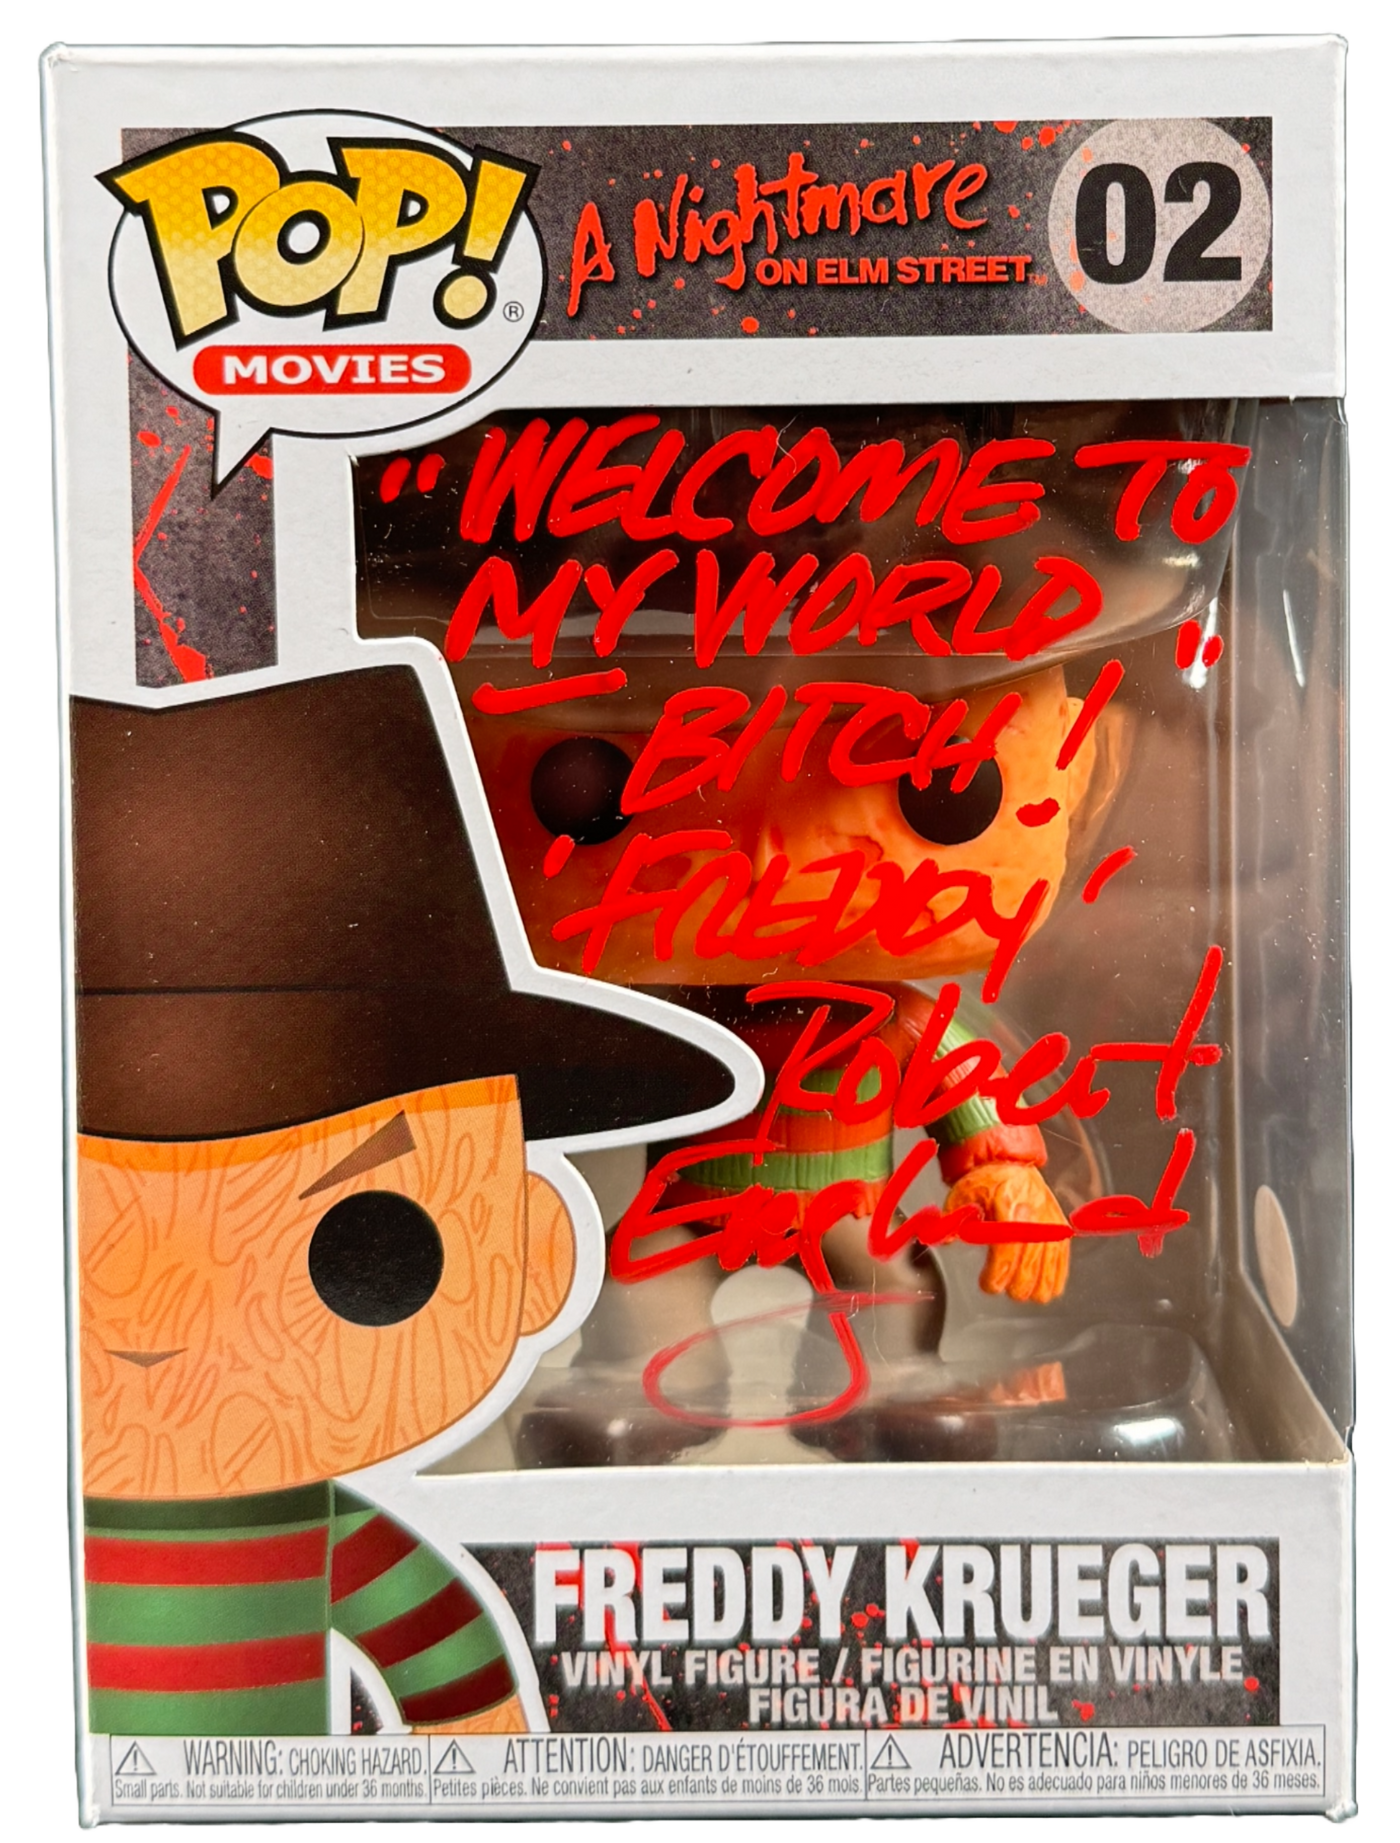 Robert Englund "Freddy Krueger" Signed Funko Pop #02 A Nightmare on Elm Street Autographed JSA COA 3